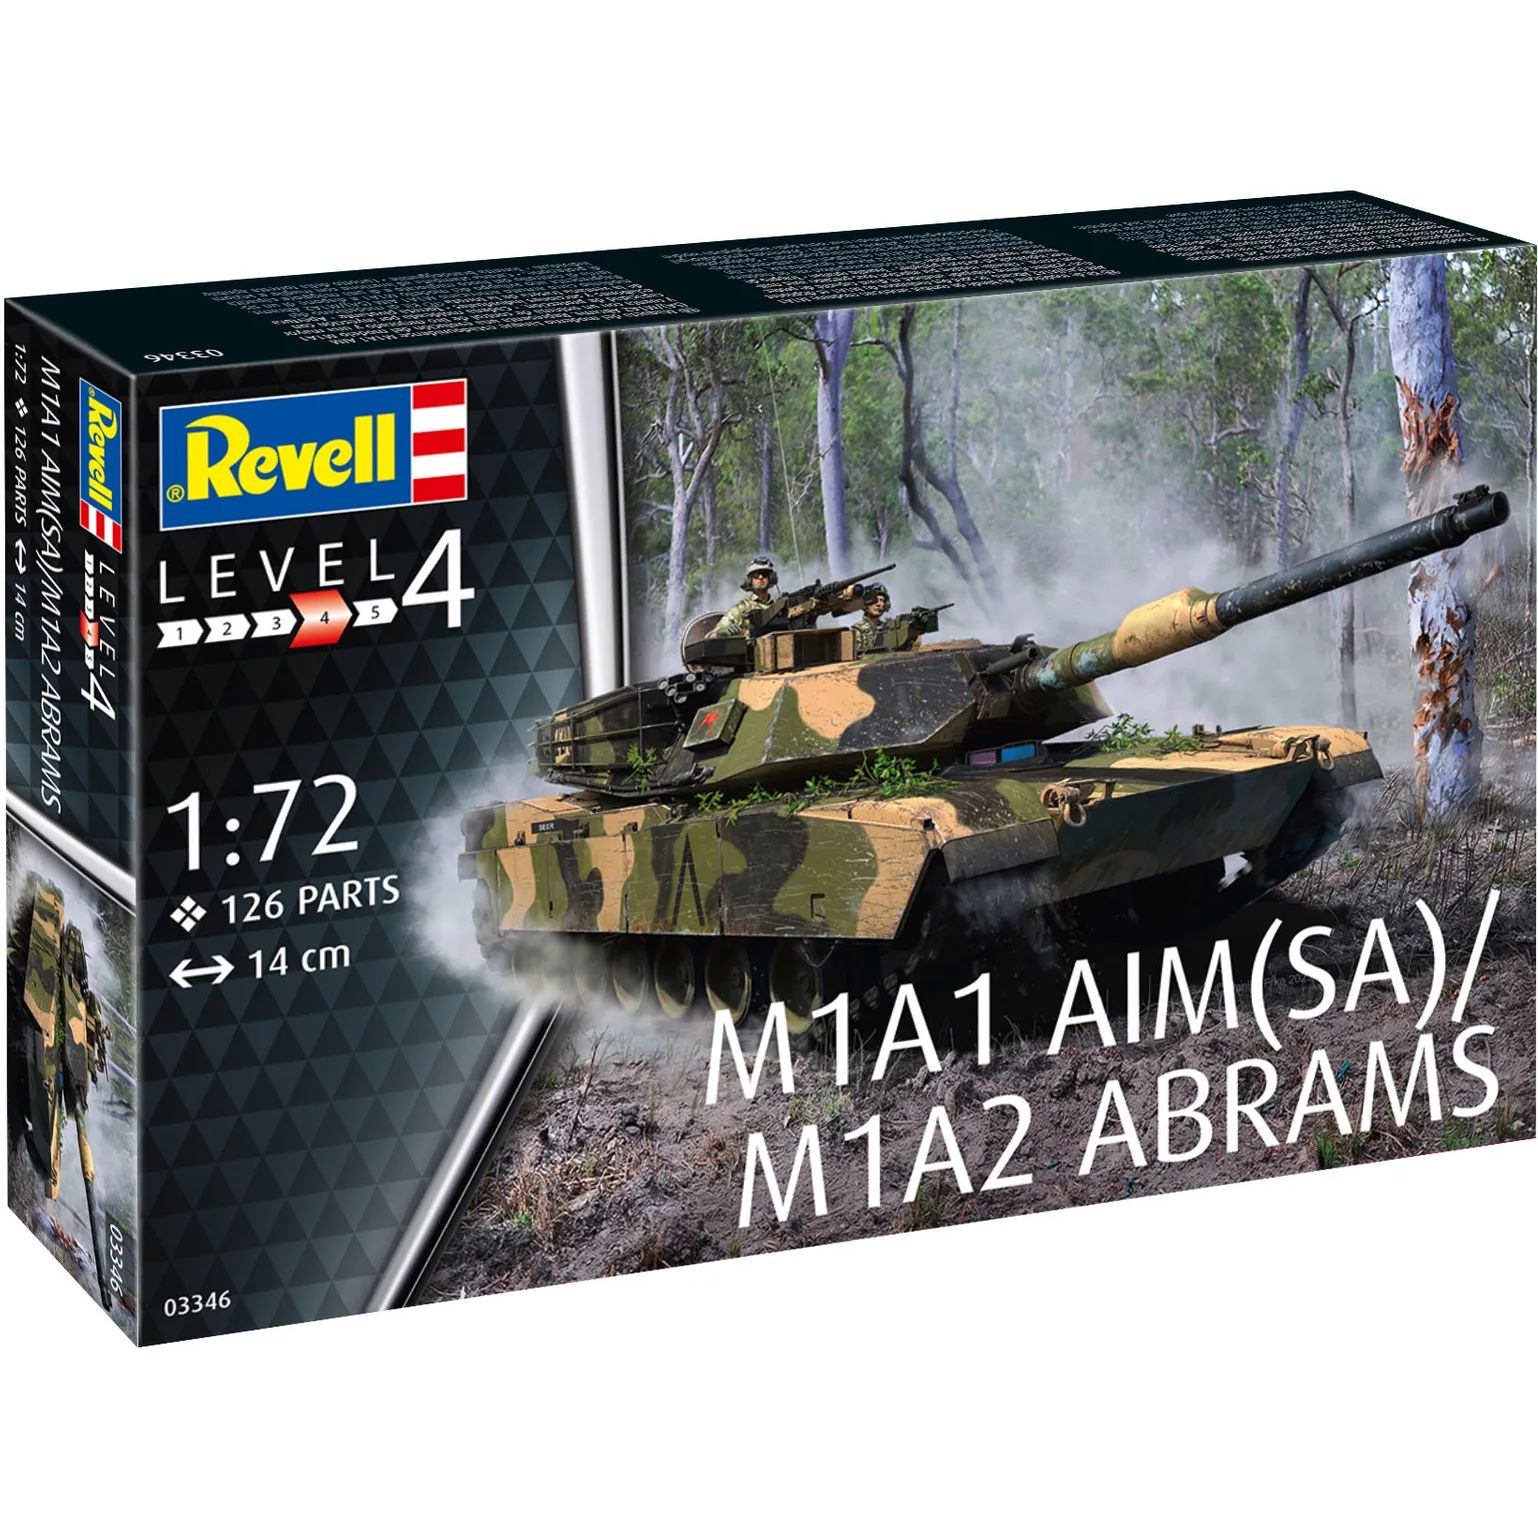 Сборная модель Revell Танк Абрамс M1A1 AIM(SA)/M1A2 масштаб 1:72, 126 деталей (RVL-03346) - фото 1